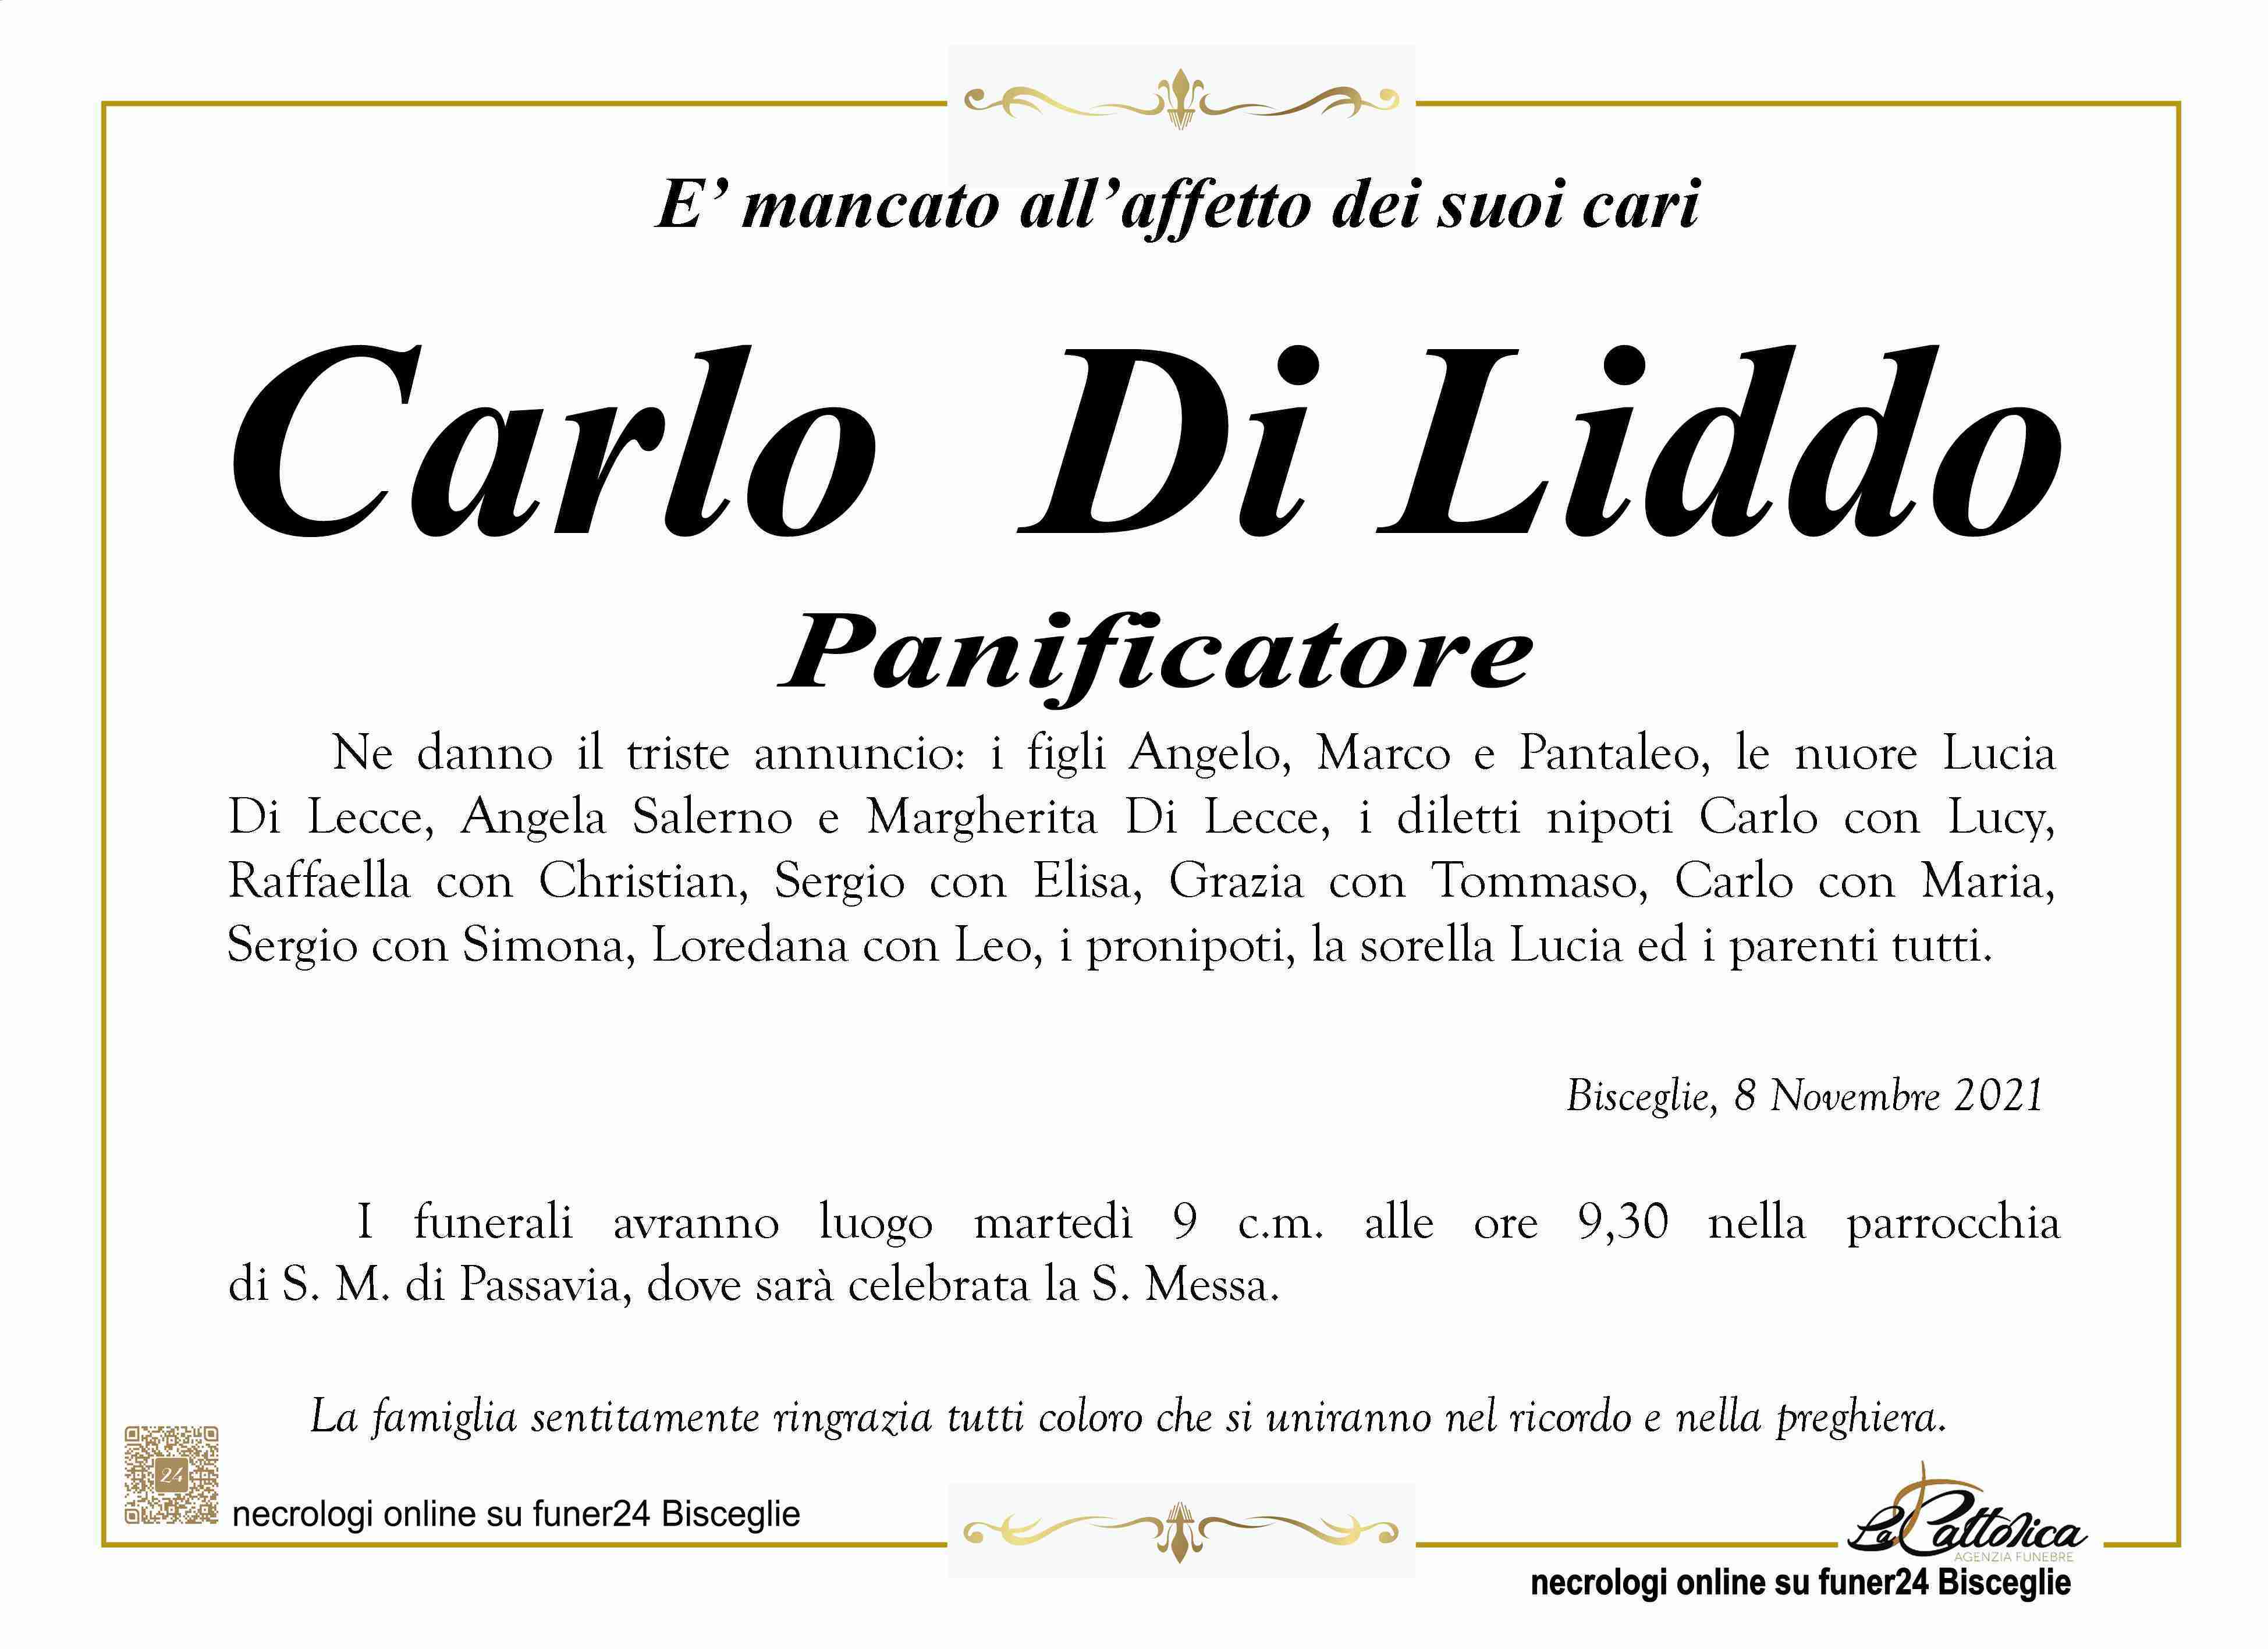 Carlo Di Liddo